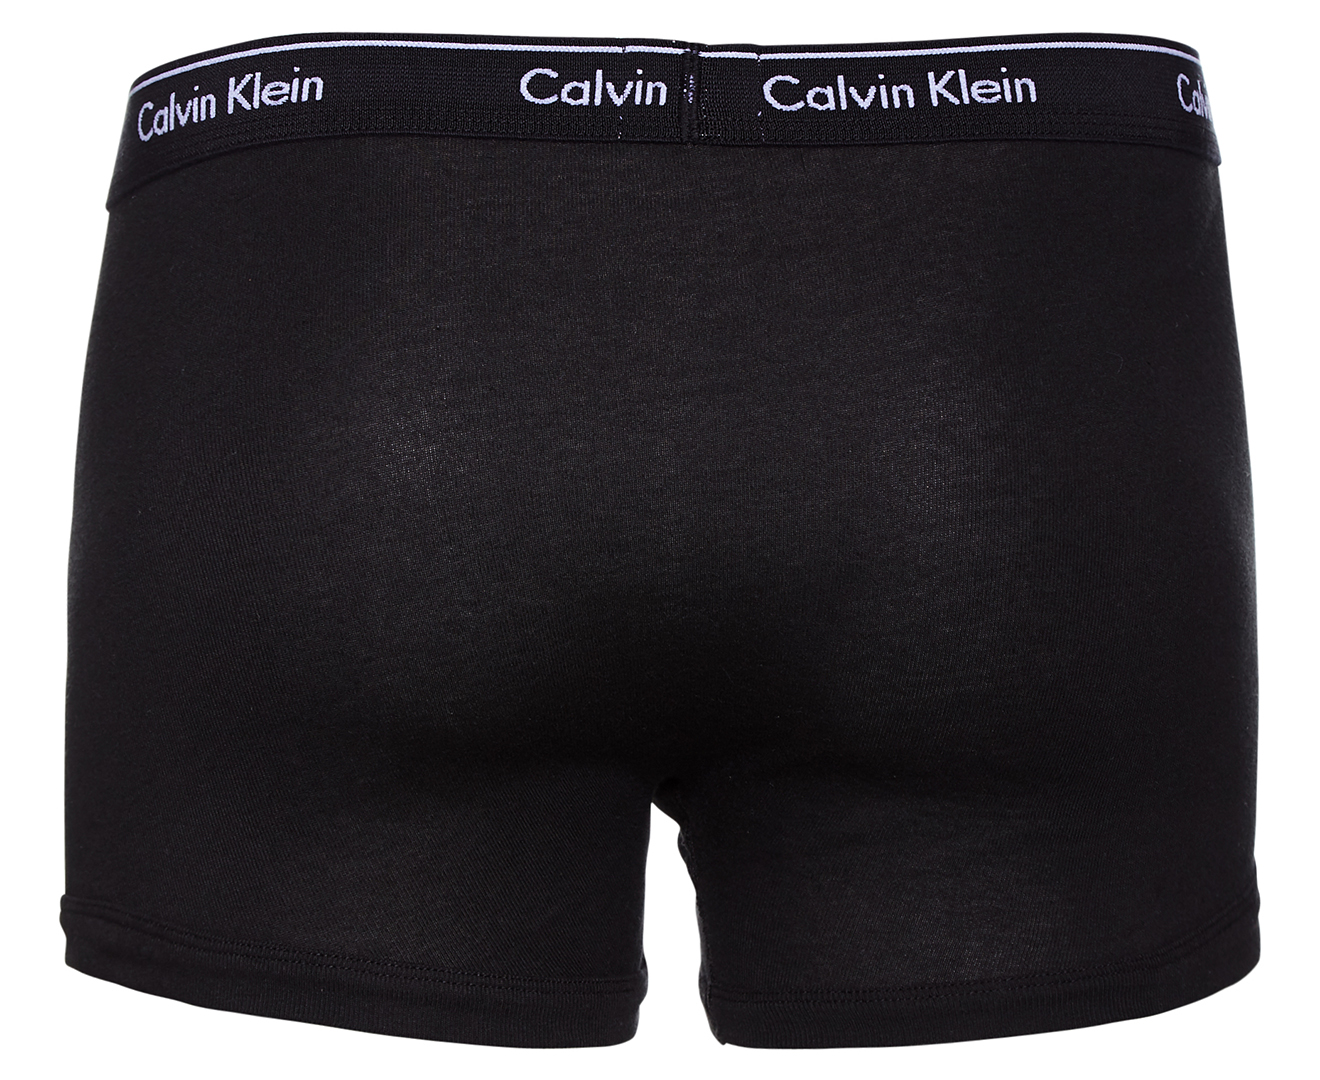 Calvin Klein Men's Cotton Classics Trunks 3-Pack - Black/Grey Heather ...